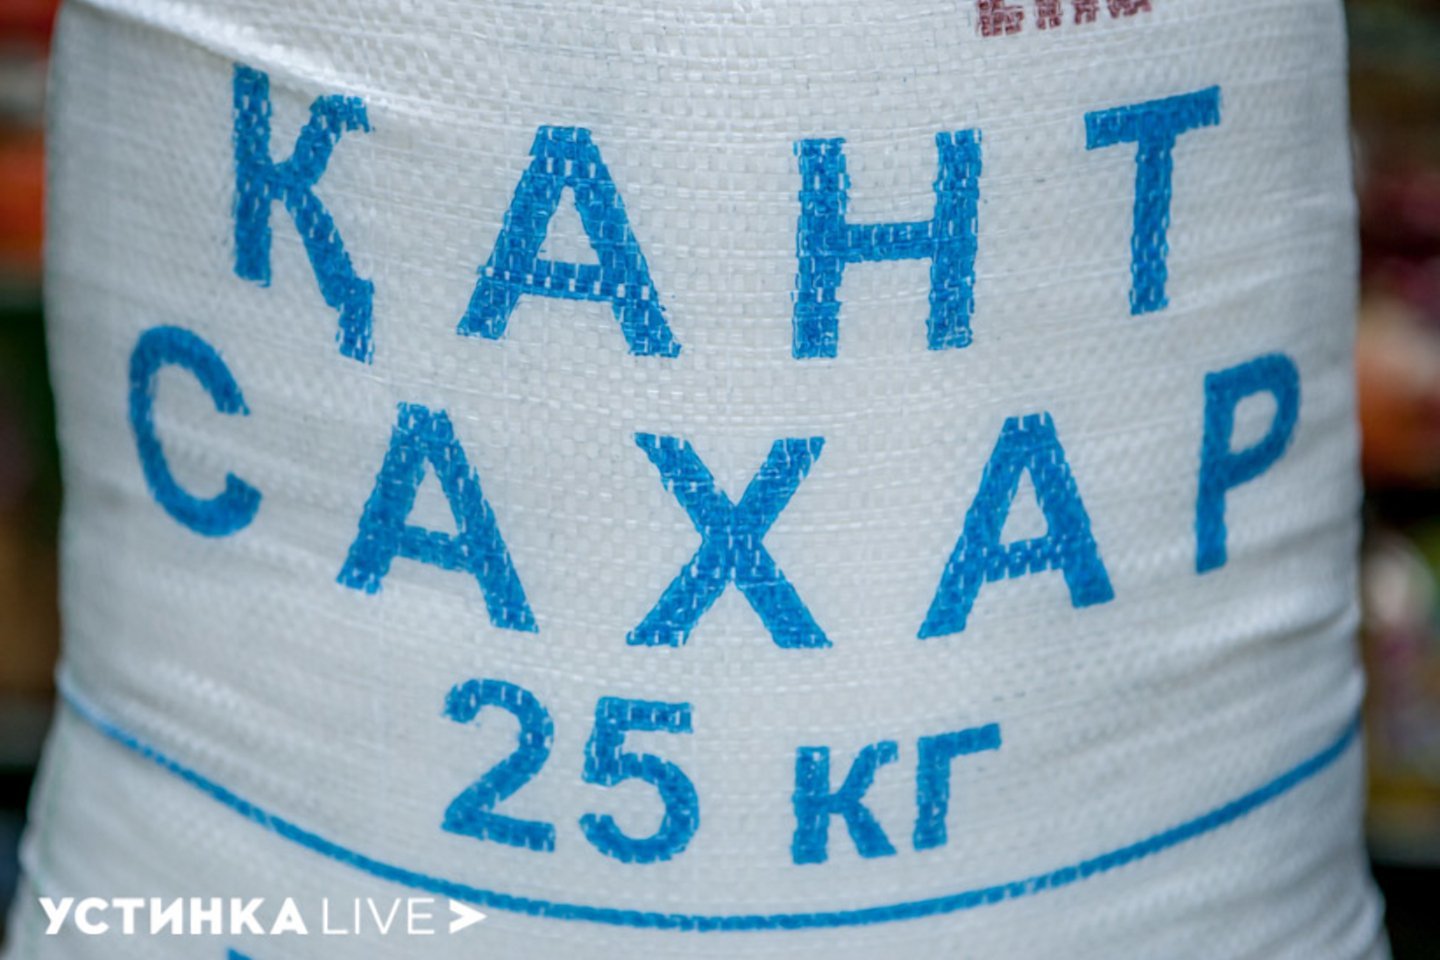 Новости Казахстана / Экономика в Казахстане / В дефиците сахара в РК виноват монополист, в его отношении начнут расследование